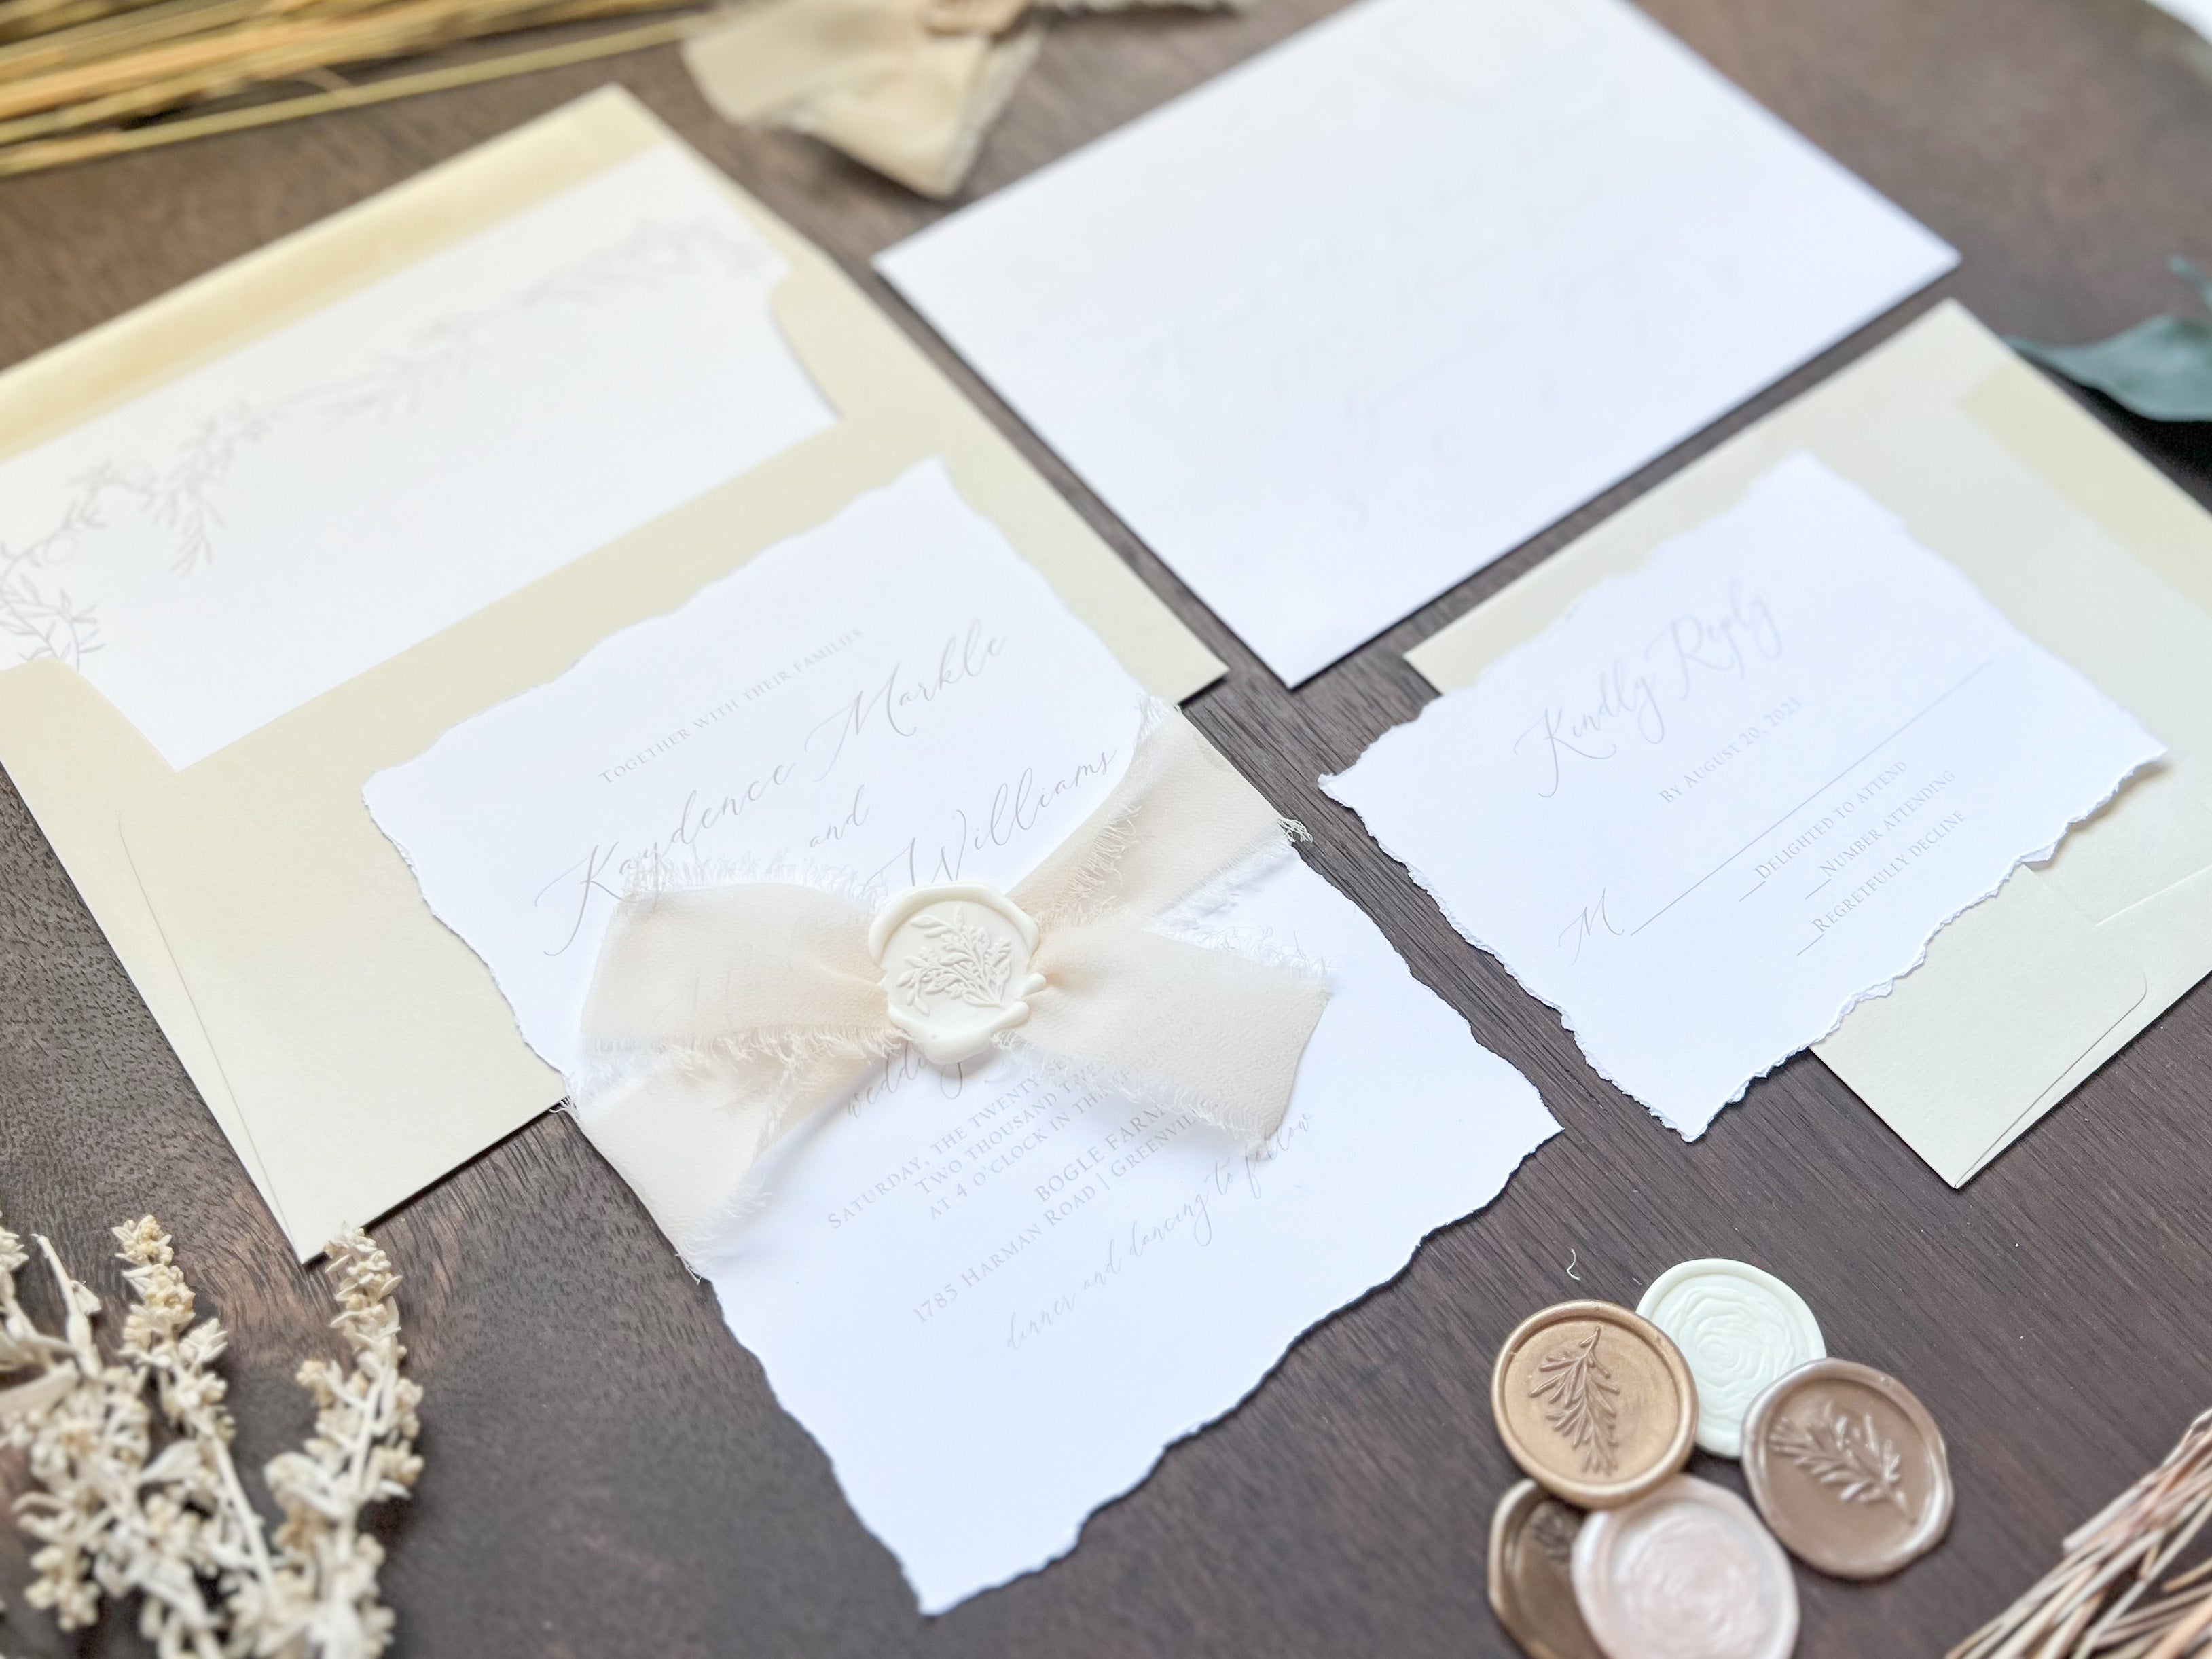 Classic Elegant Wedding Invitation with Deckled Edging, White